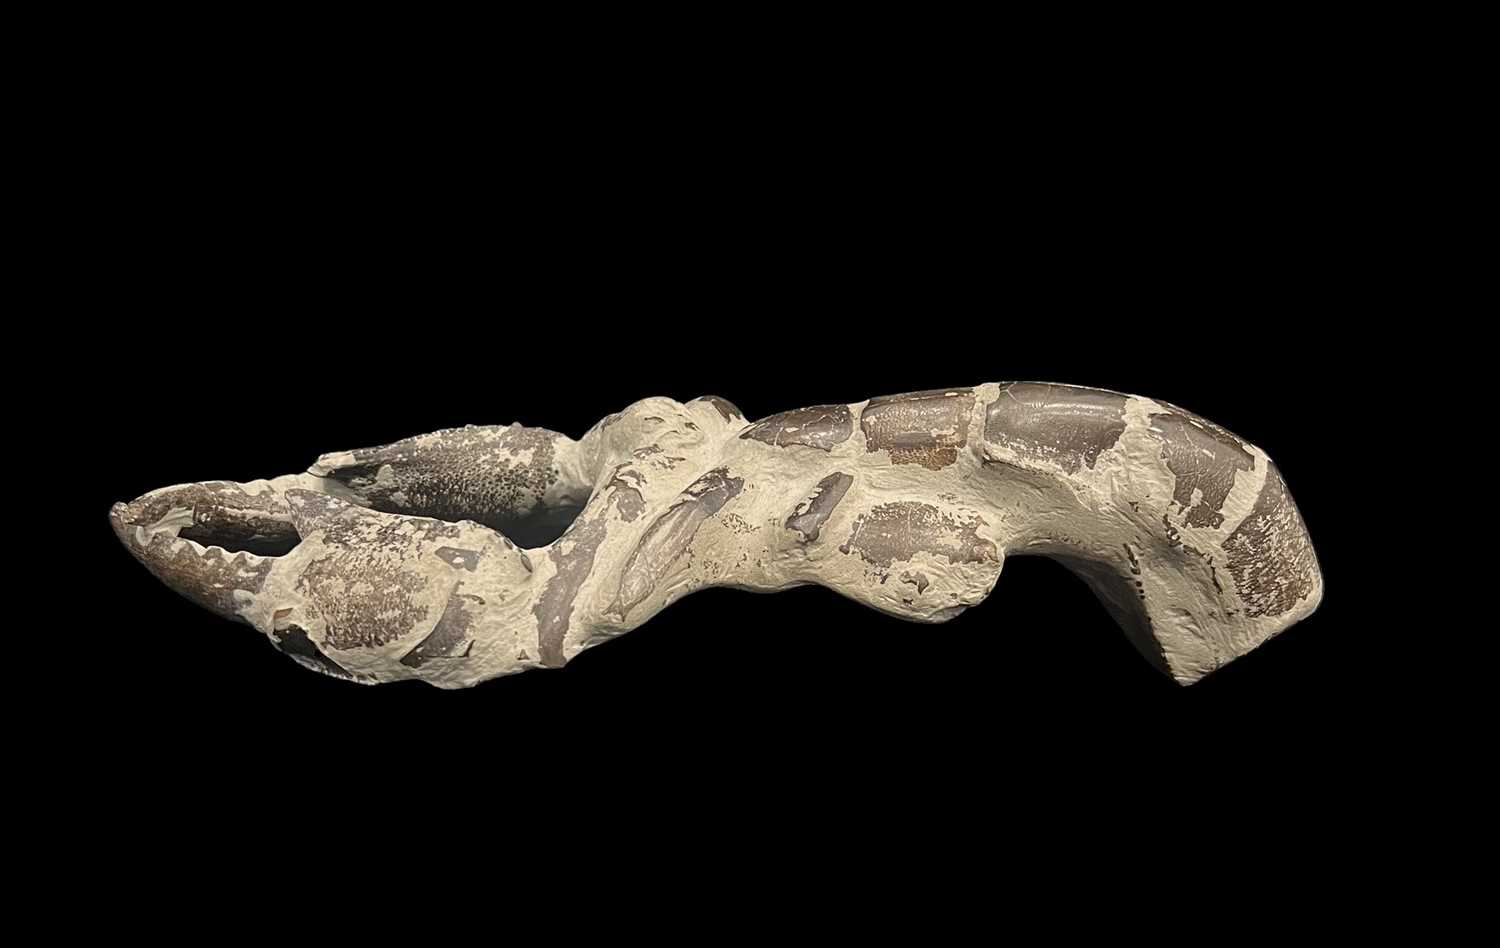 A LARGE FOSSILISED CRAYFISH, MIOCENE PERIOD, 12 MILLION YEARS OLD - Image 2 of 3